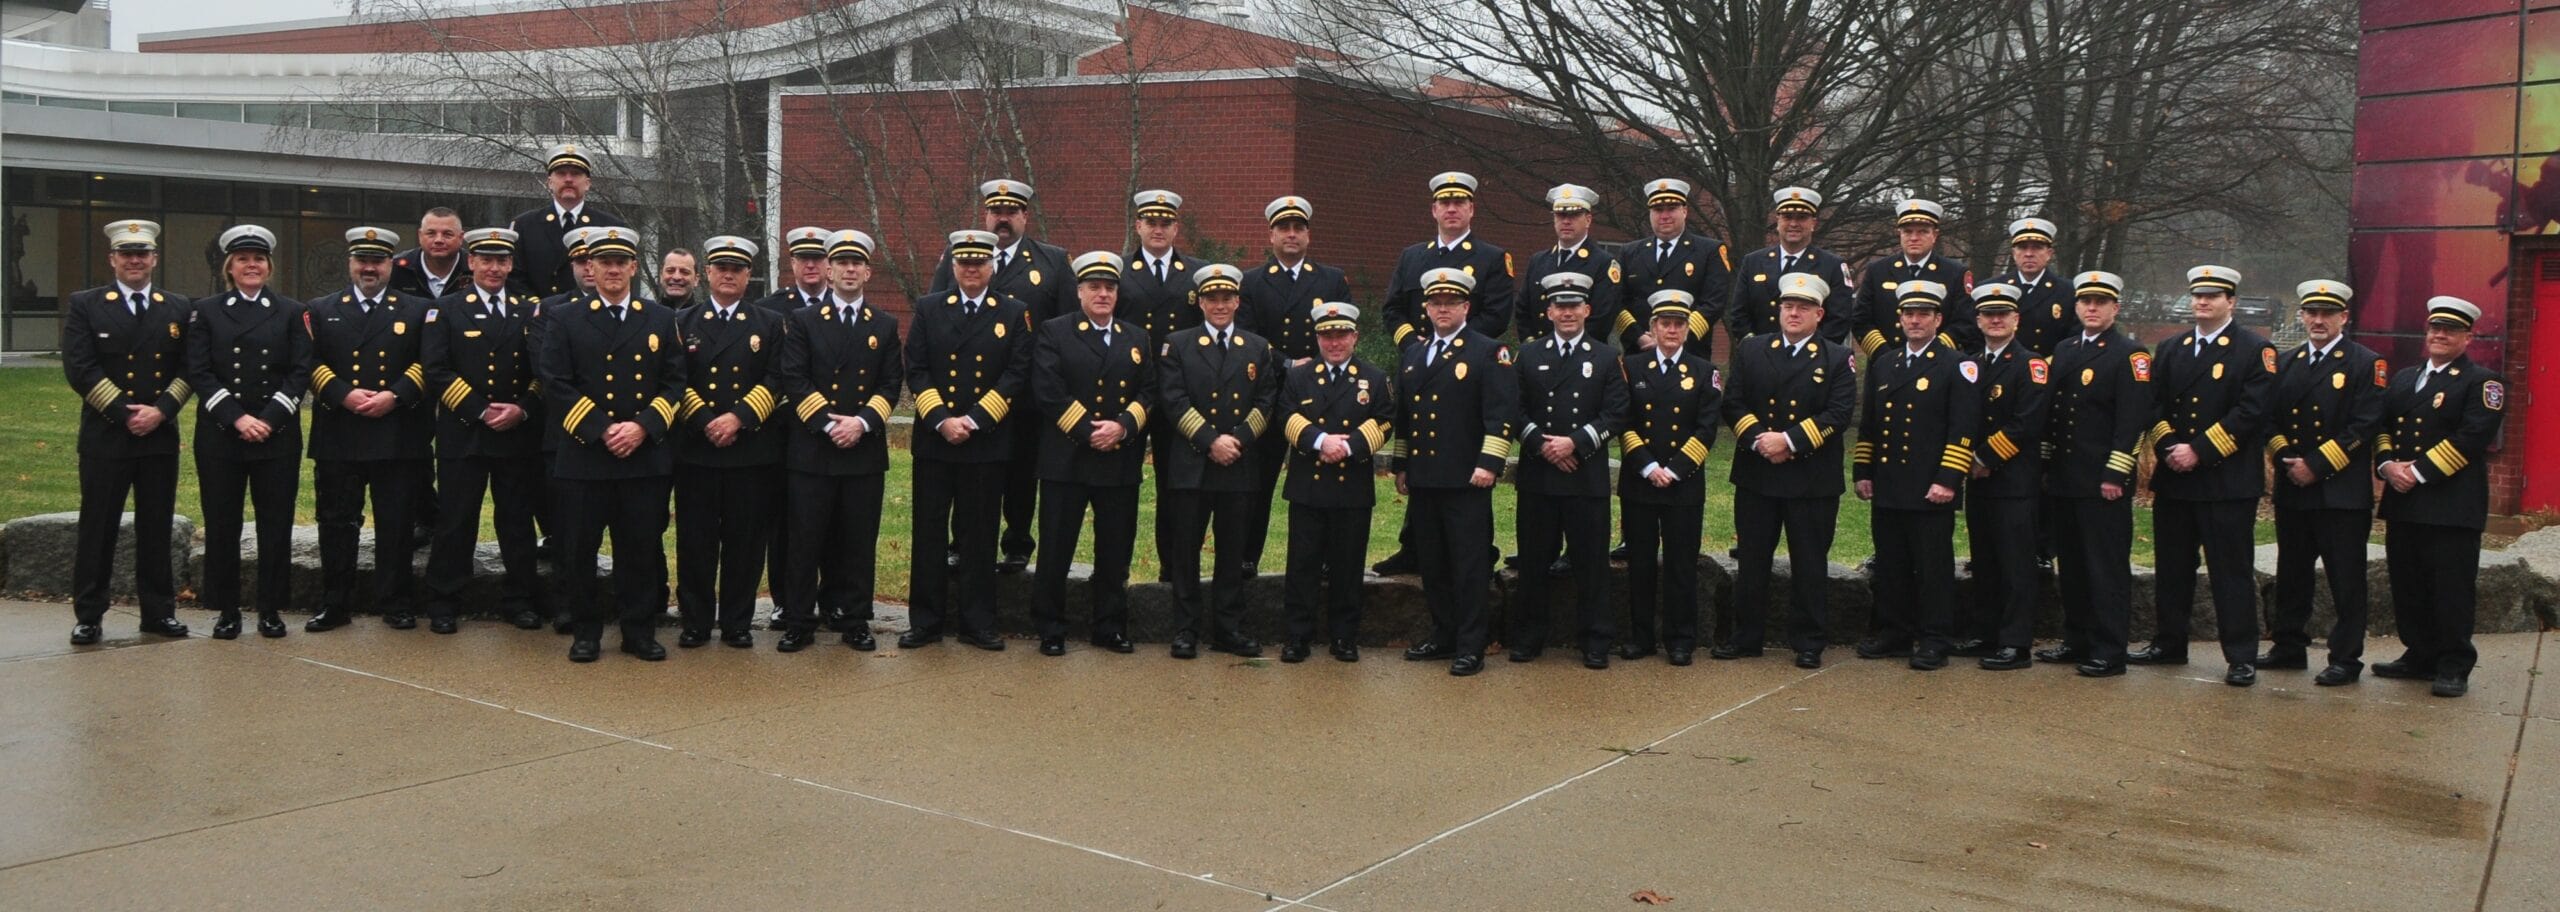 Grafton fire chief graduates from management program